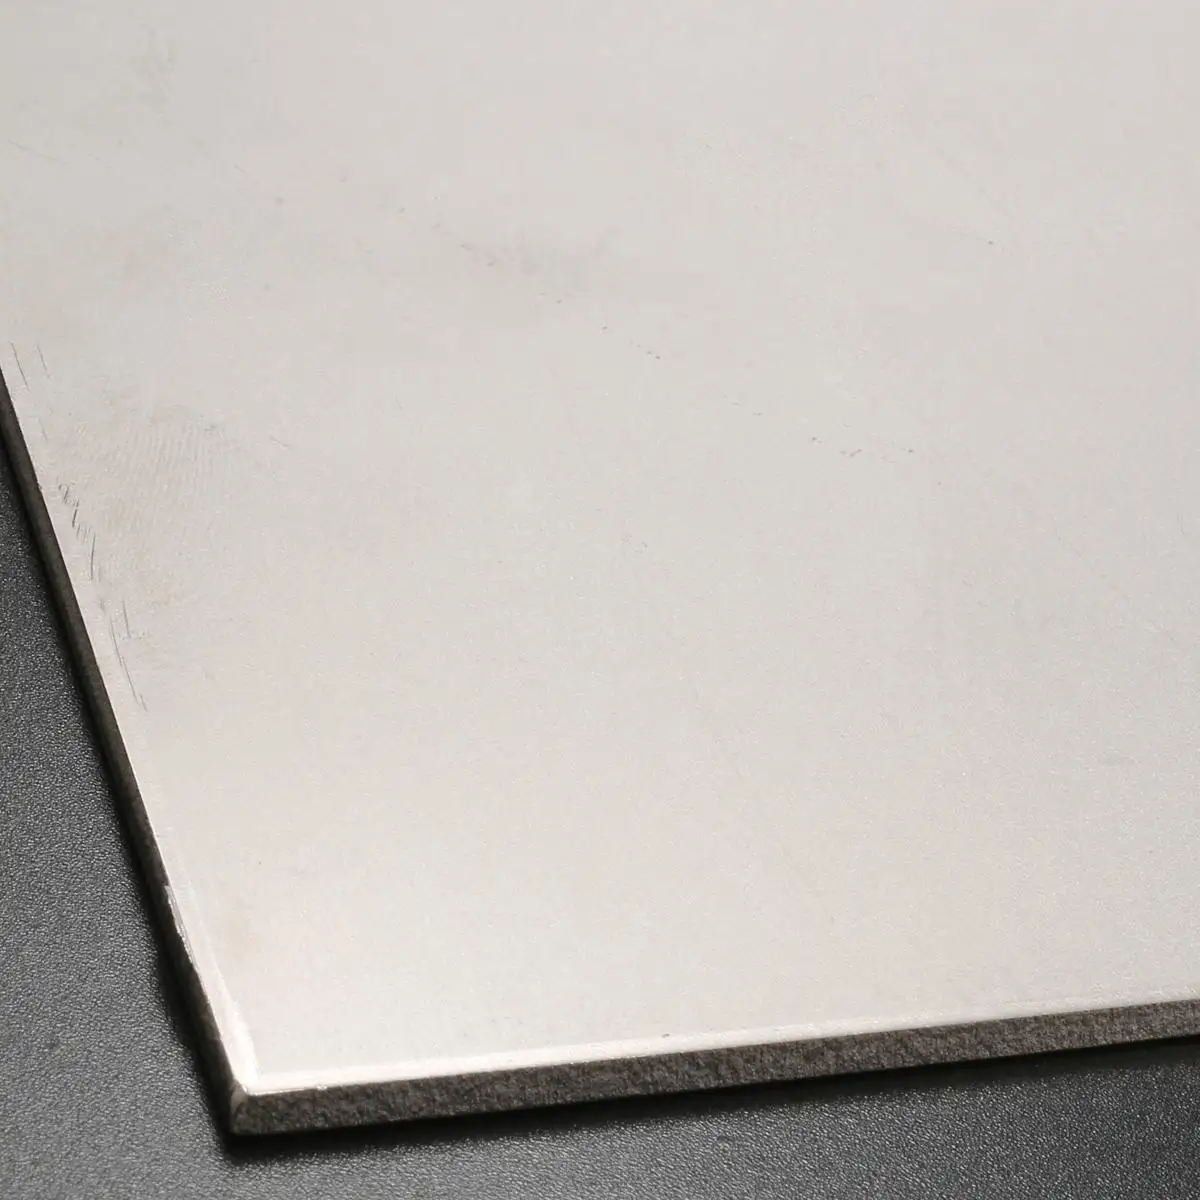 300X150X3 мм Толщина титана 6al-4v листовая пластина из титана металлическая листовая пластина серебро Metalwoking ремесло Титан